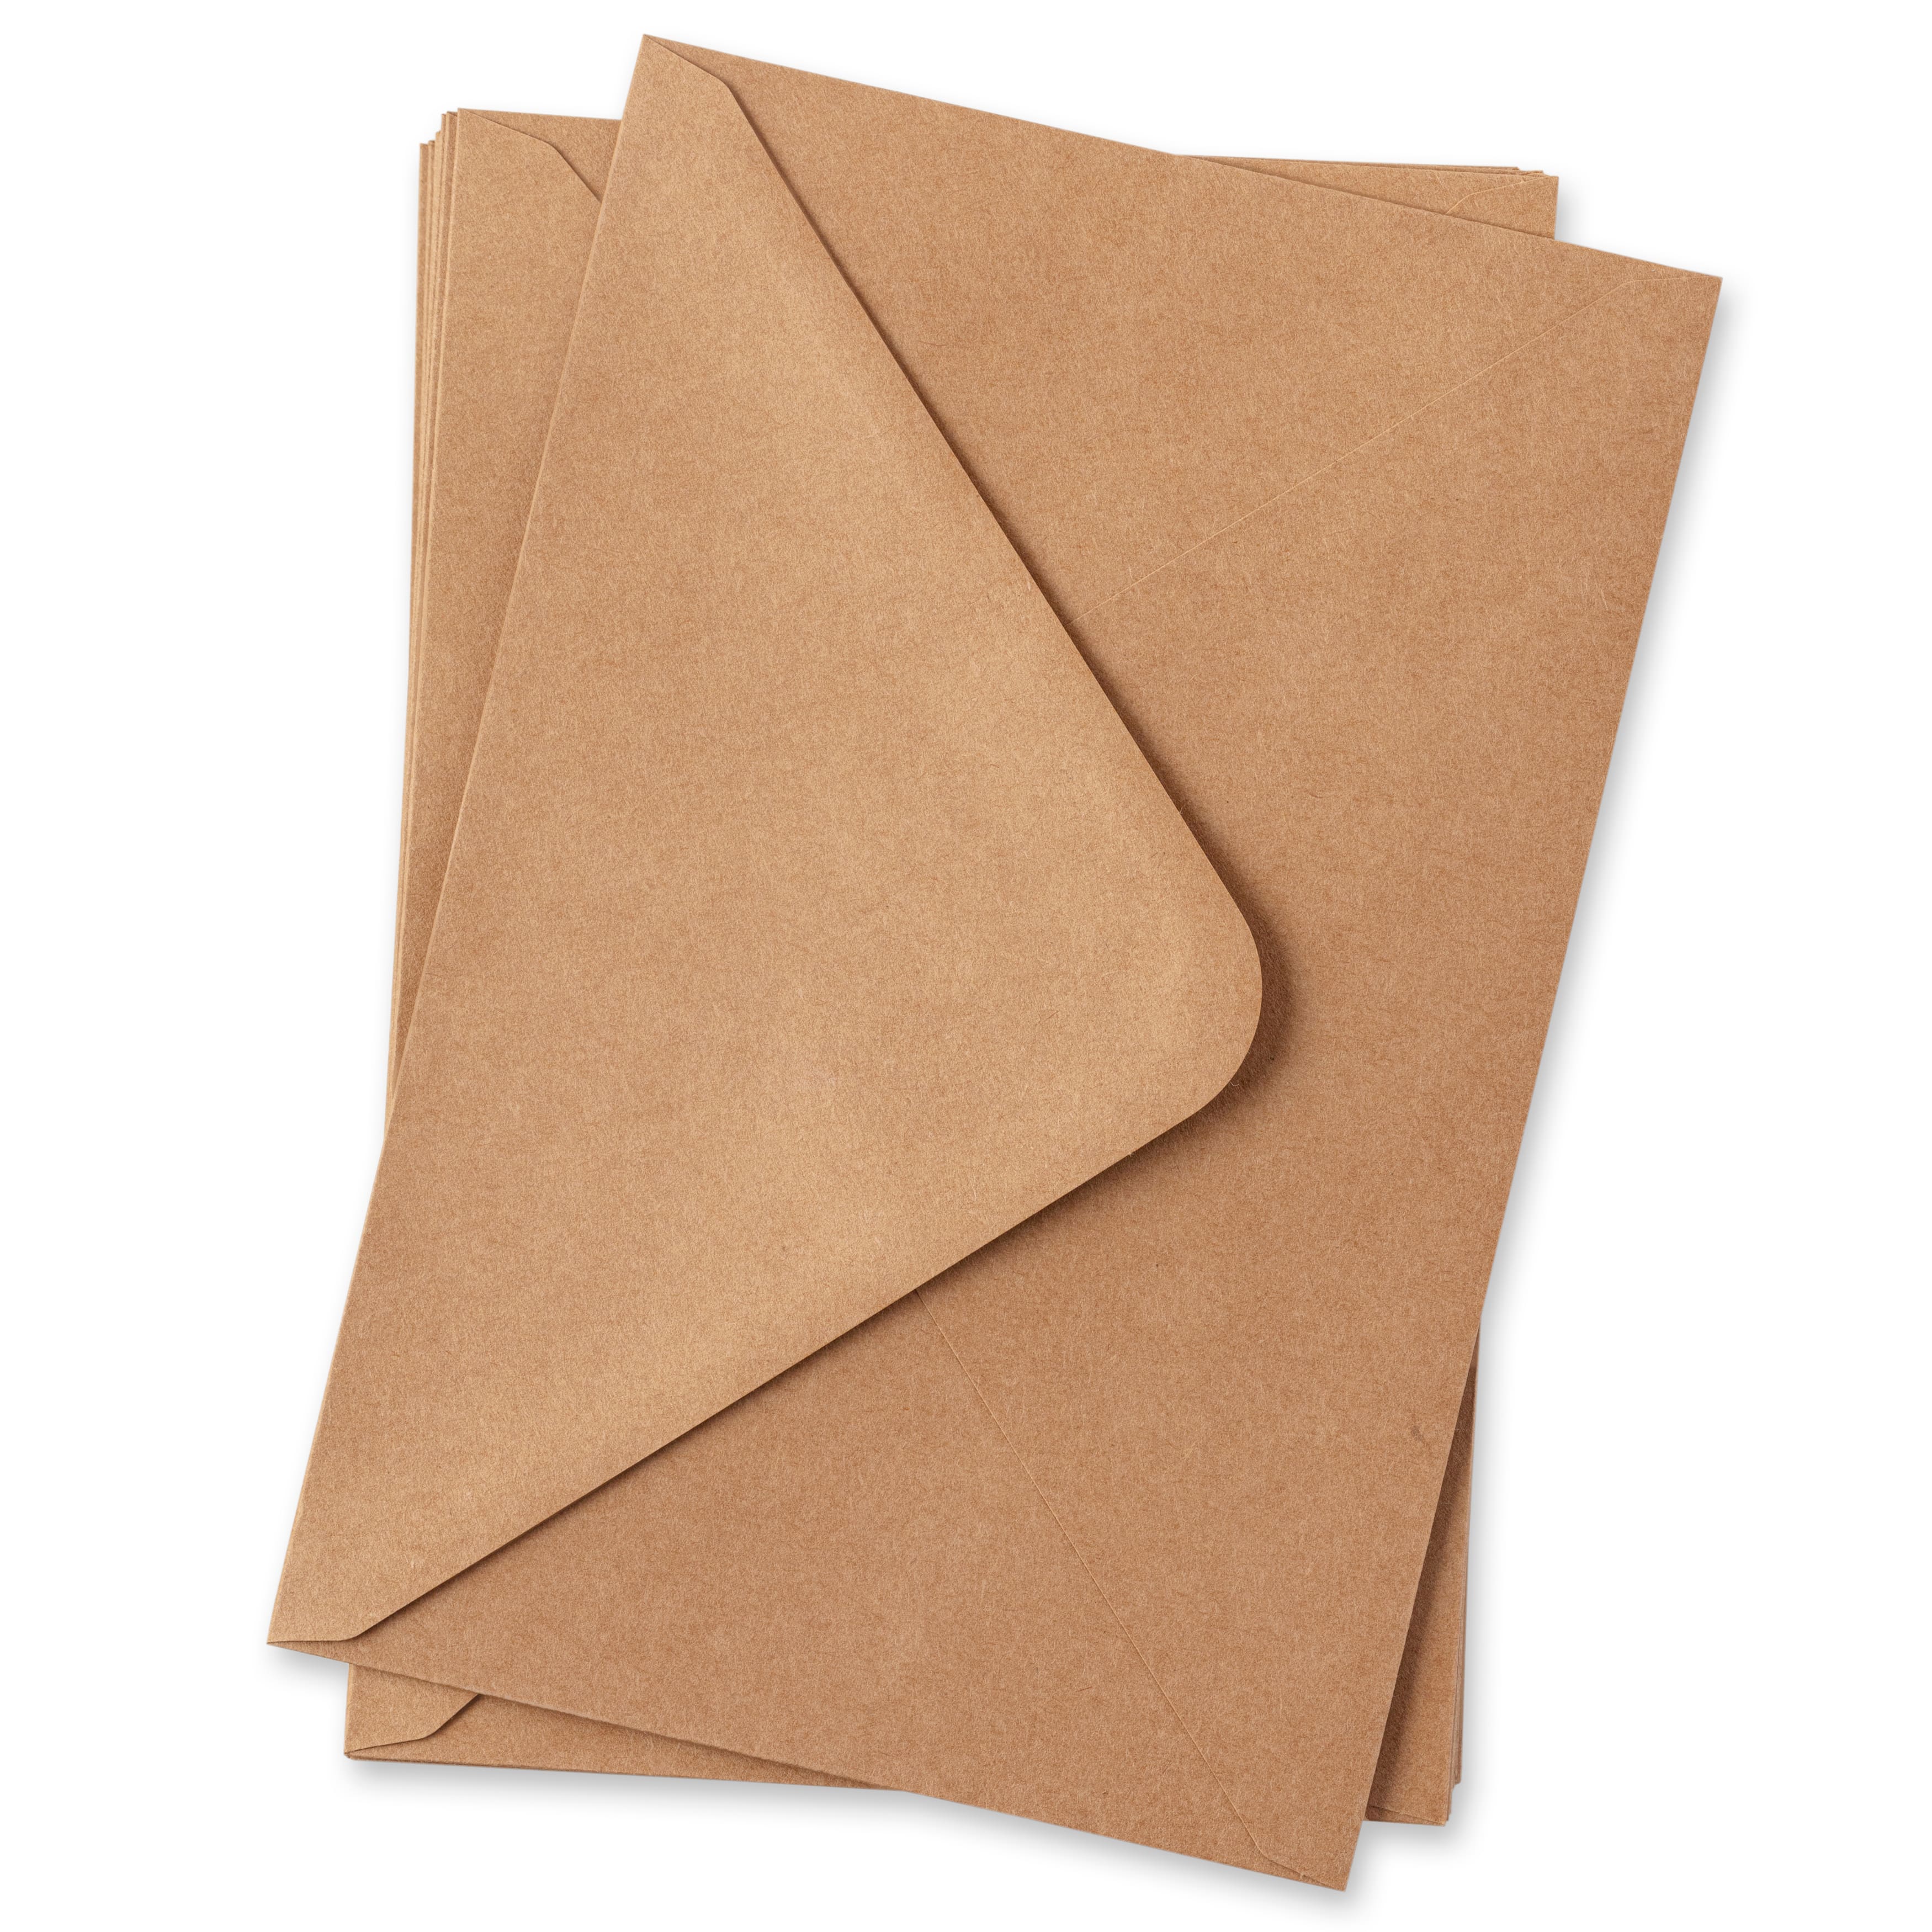 Ulikey Mini Enveloppes, 40pcs Enveloppes en Papier Kraft et 40pcs